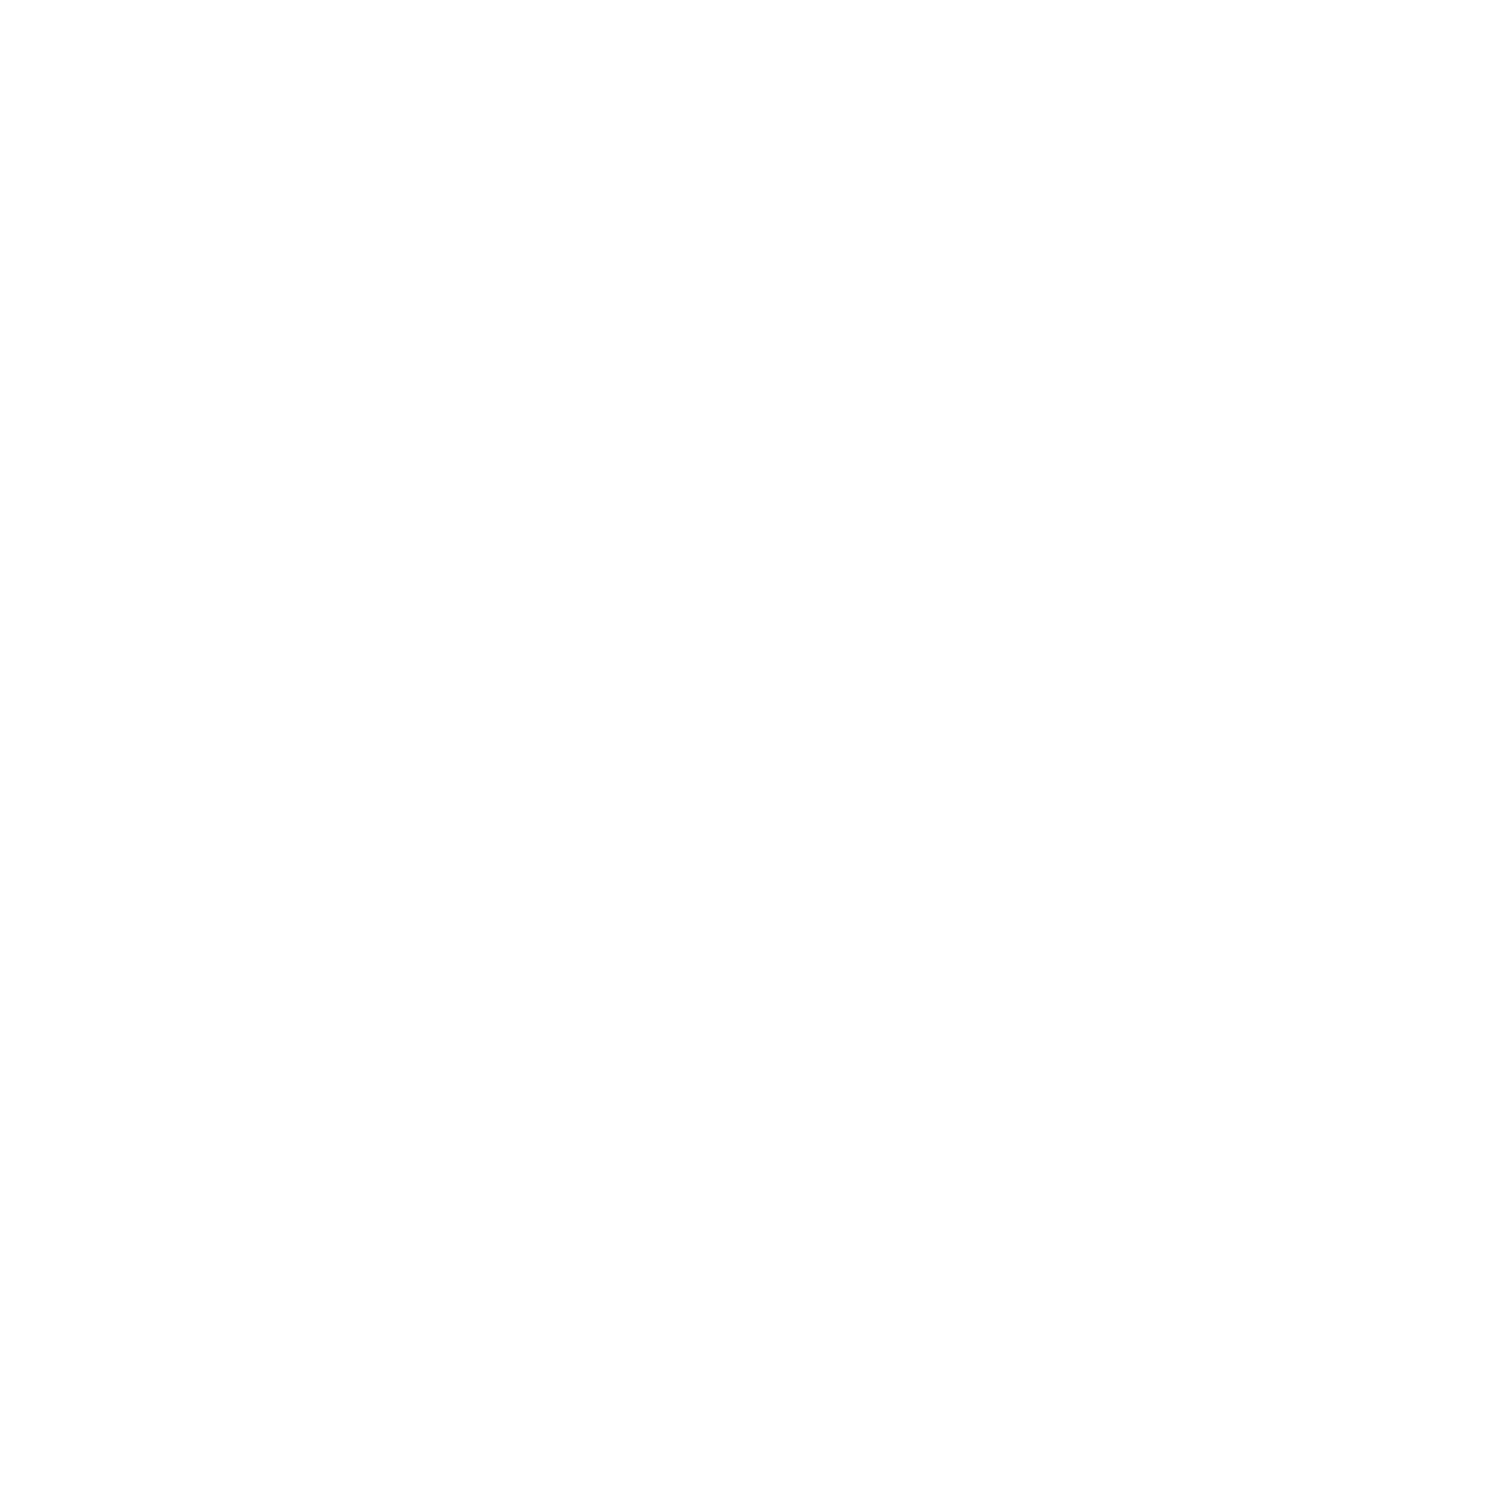 DJP_logo-01